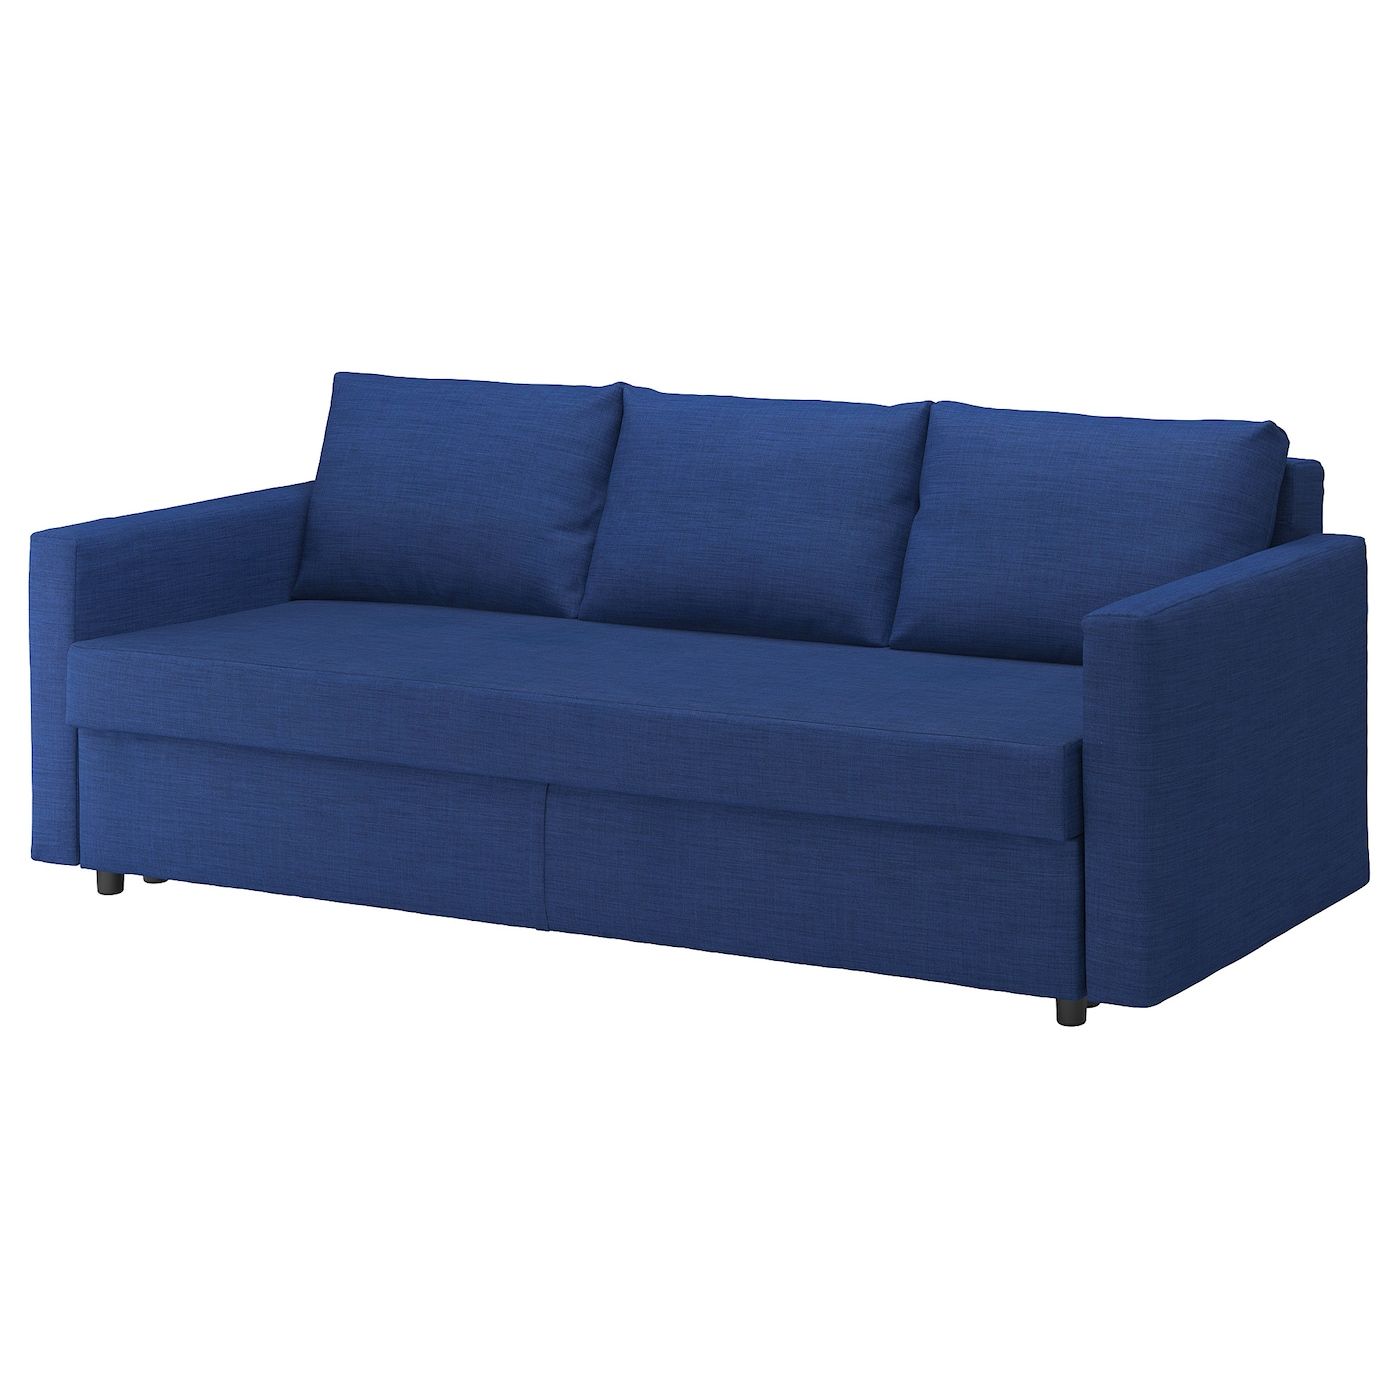 Friheten Sleeper Sofa, Skiftebo Blue – Ikea Inside Navy Sleeper Sofa Couches (View 13 of 15)